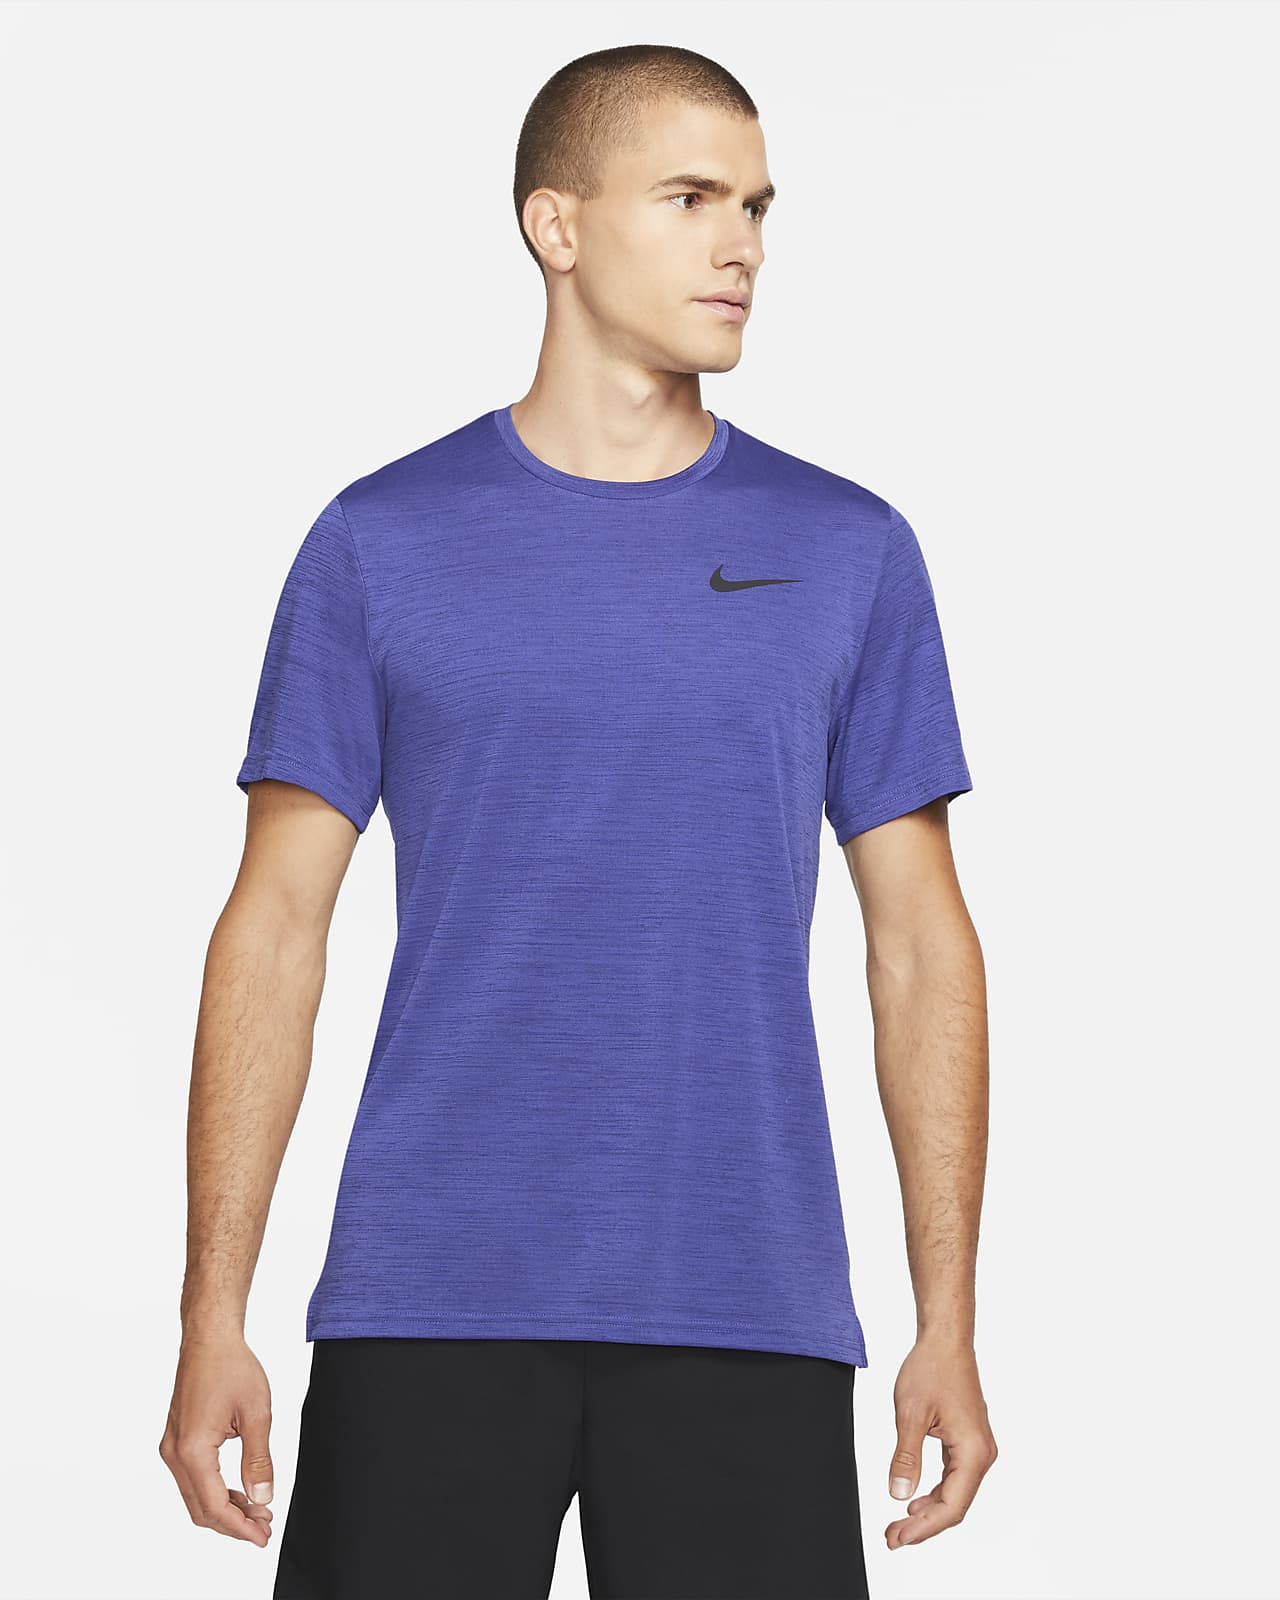 Nike Men's Short-Sleeve Top